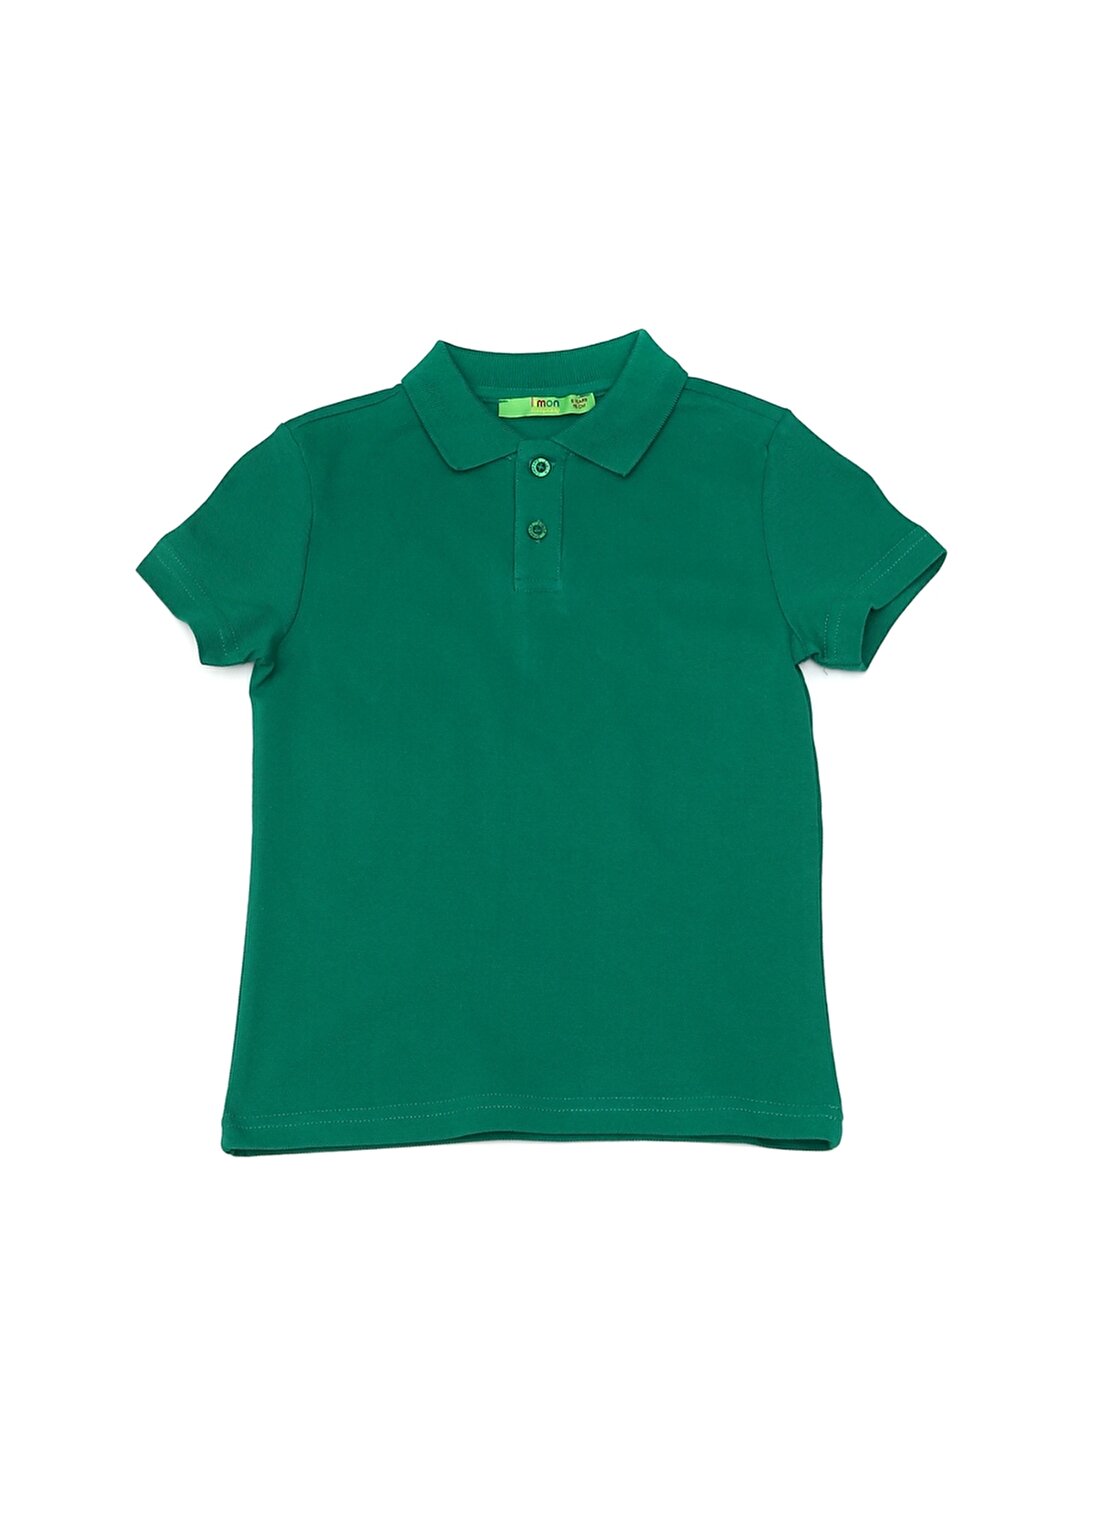 Limon Erkek Çocuk Polo Yaka Yeşil T-Shirt